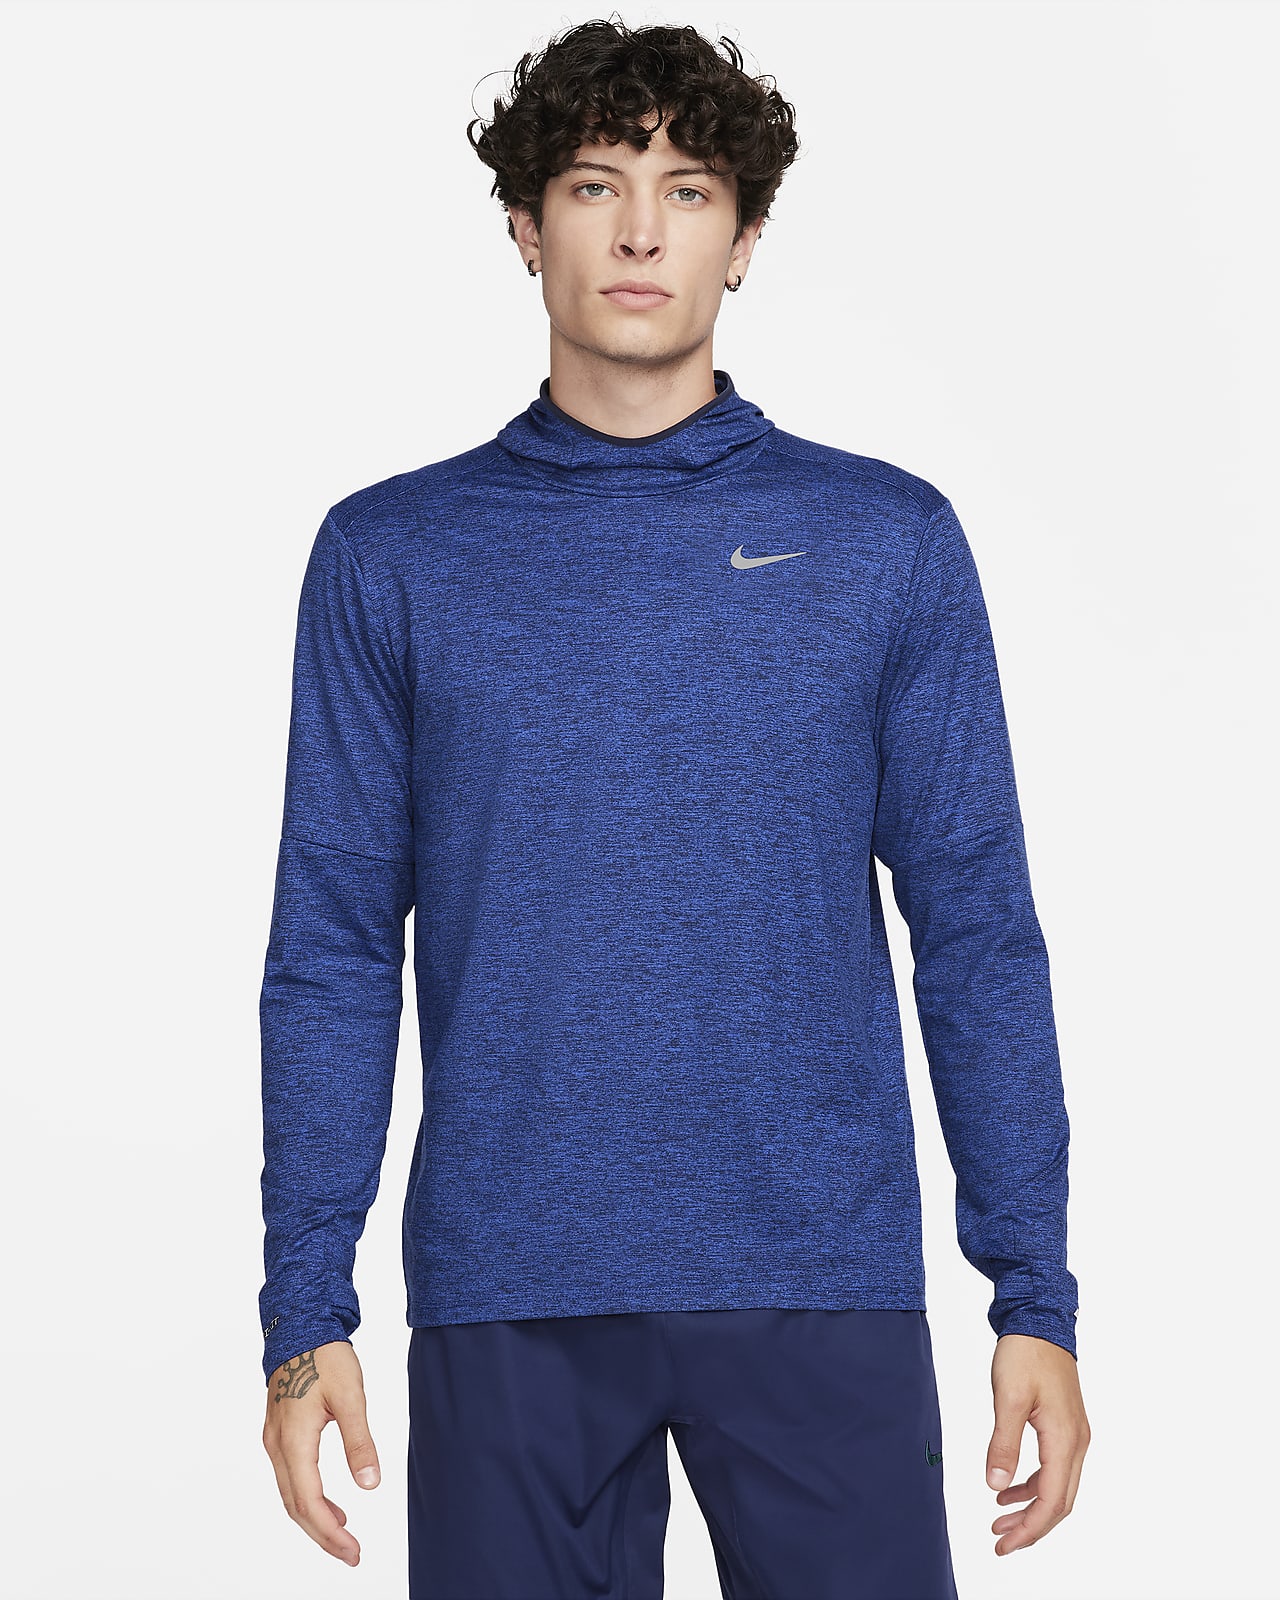 Nike Dri-FIT Men's Sleeveless Fleece Fitness Top